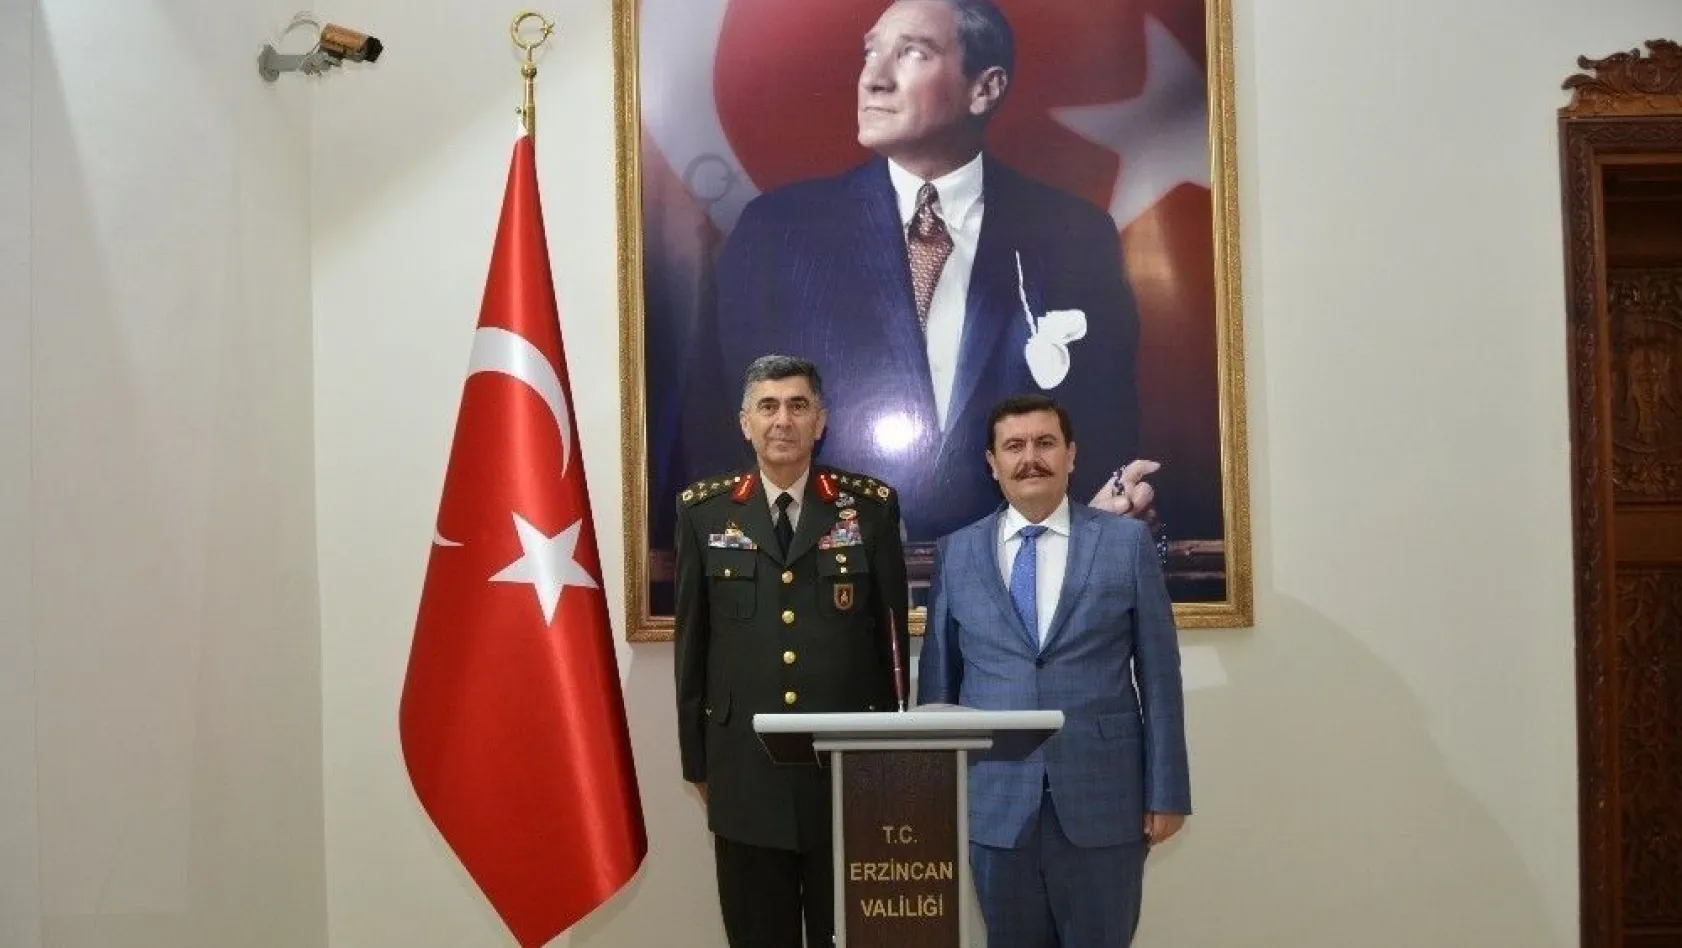 Kara Kuvvetleri Komutanı Orgeneral Çolak'tan Vali Arslantaş'a veda ziyareti
